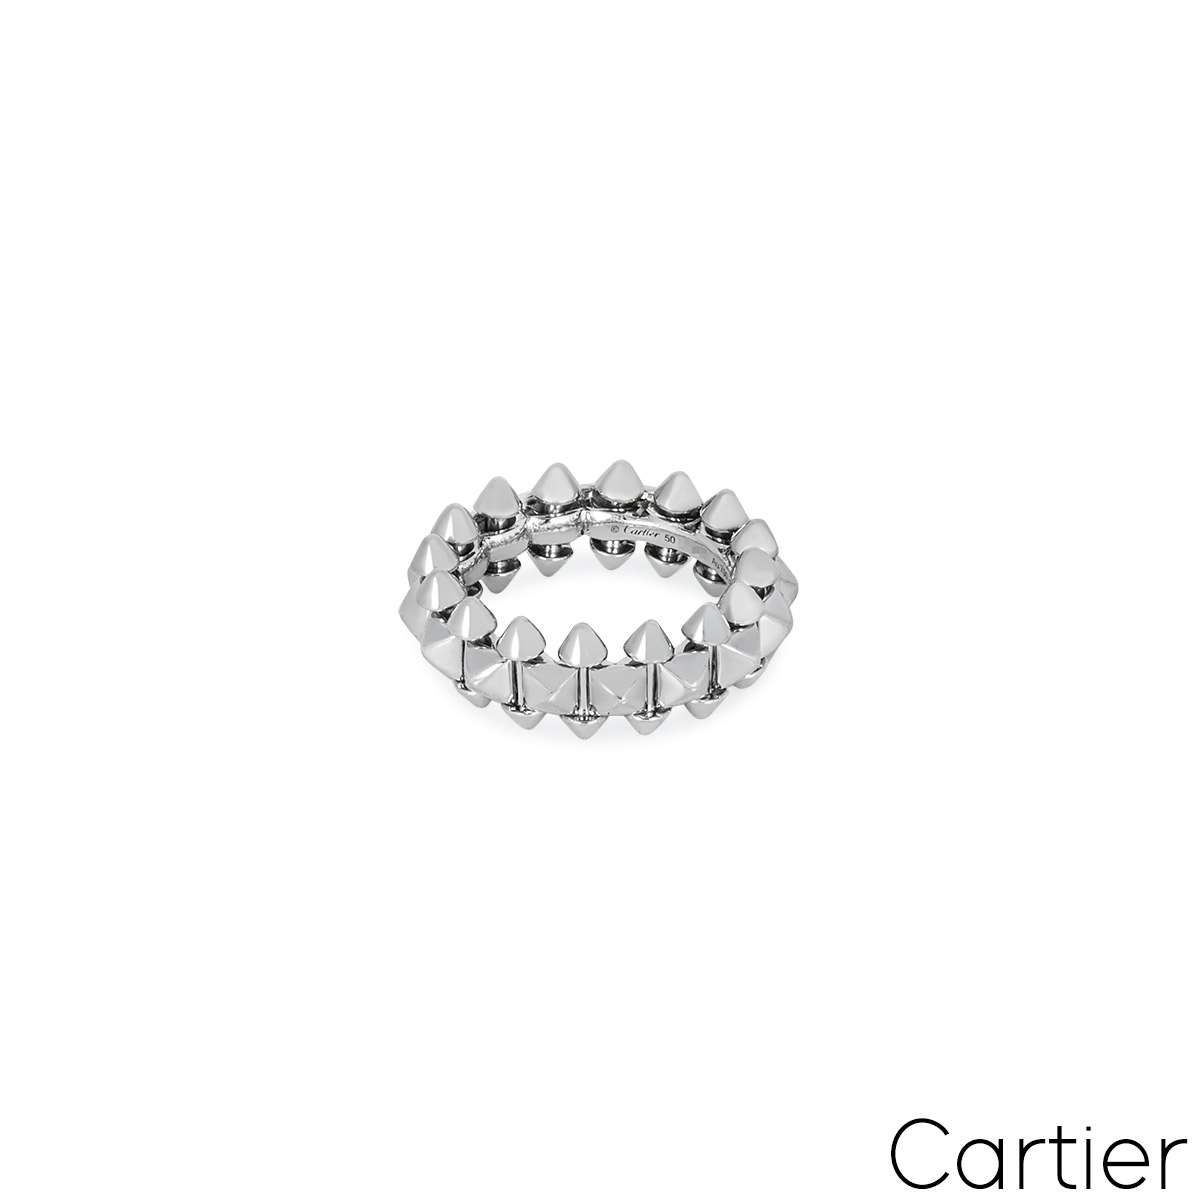 Cartier White Gold Clash de Cartier Ring Size 50 B4233000